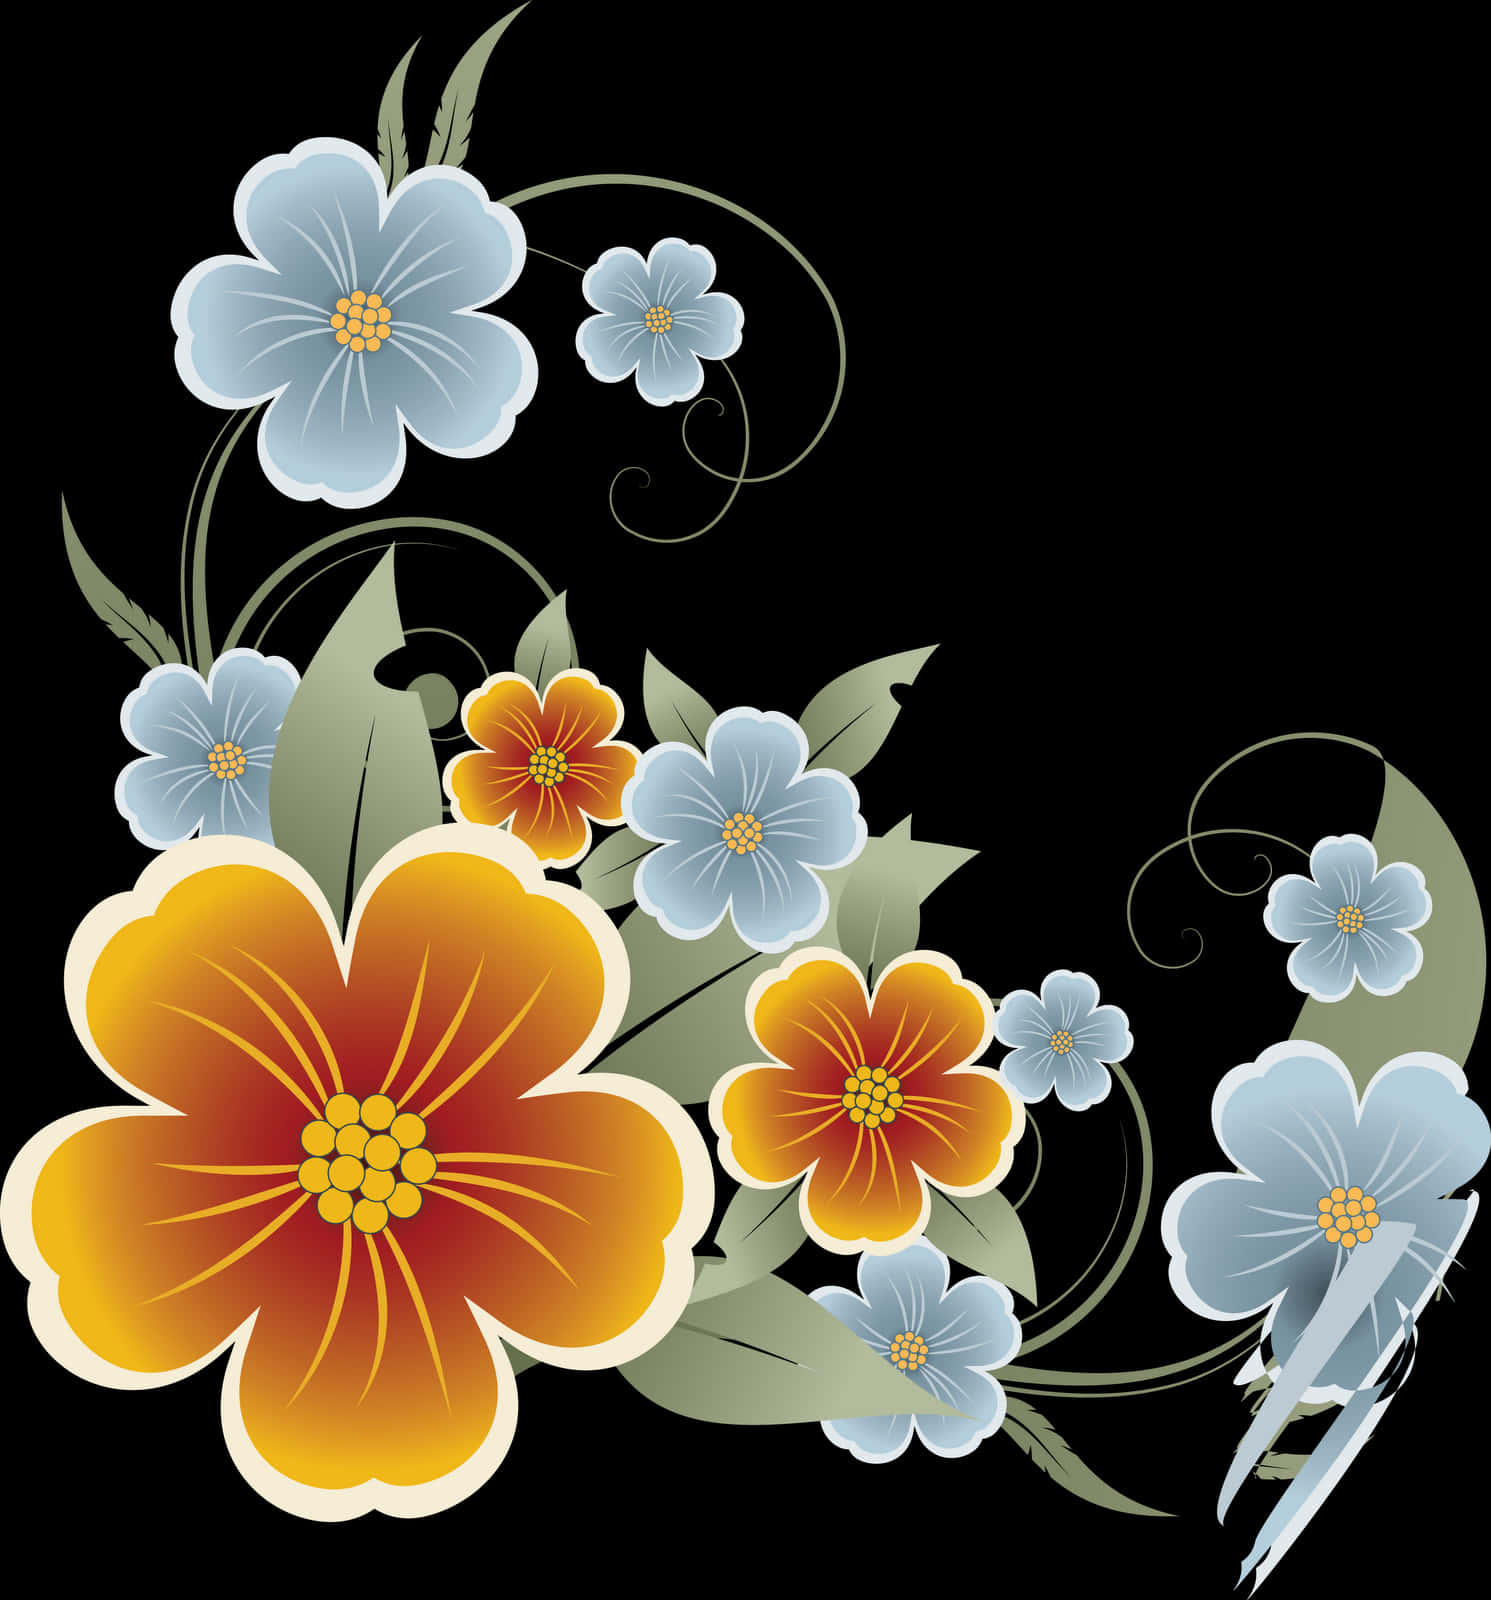 Download Elegant Floral Vector Design | Wallpapers.com